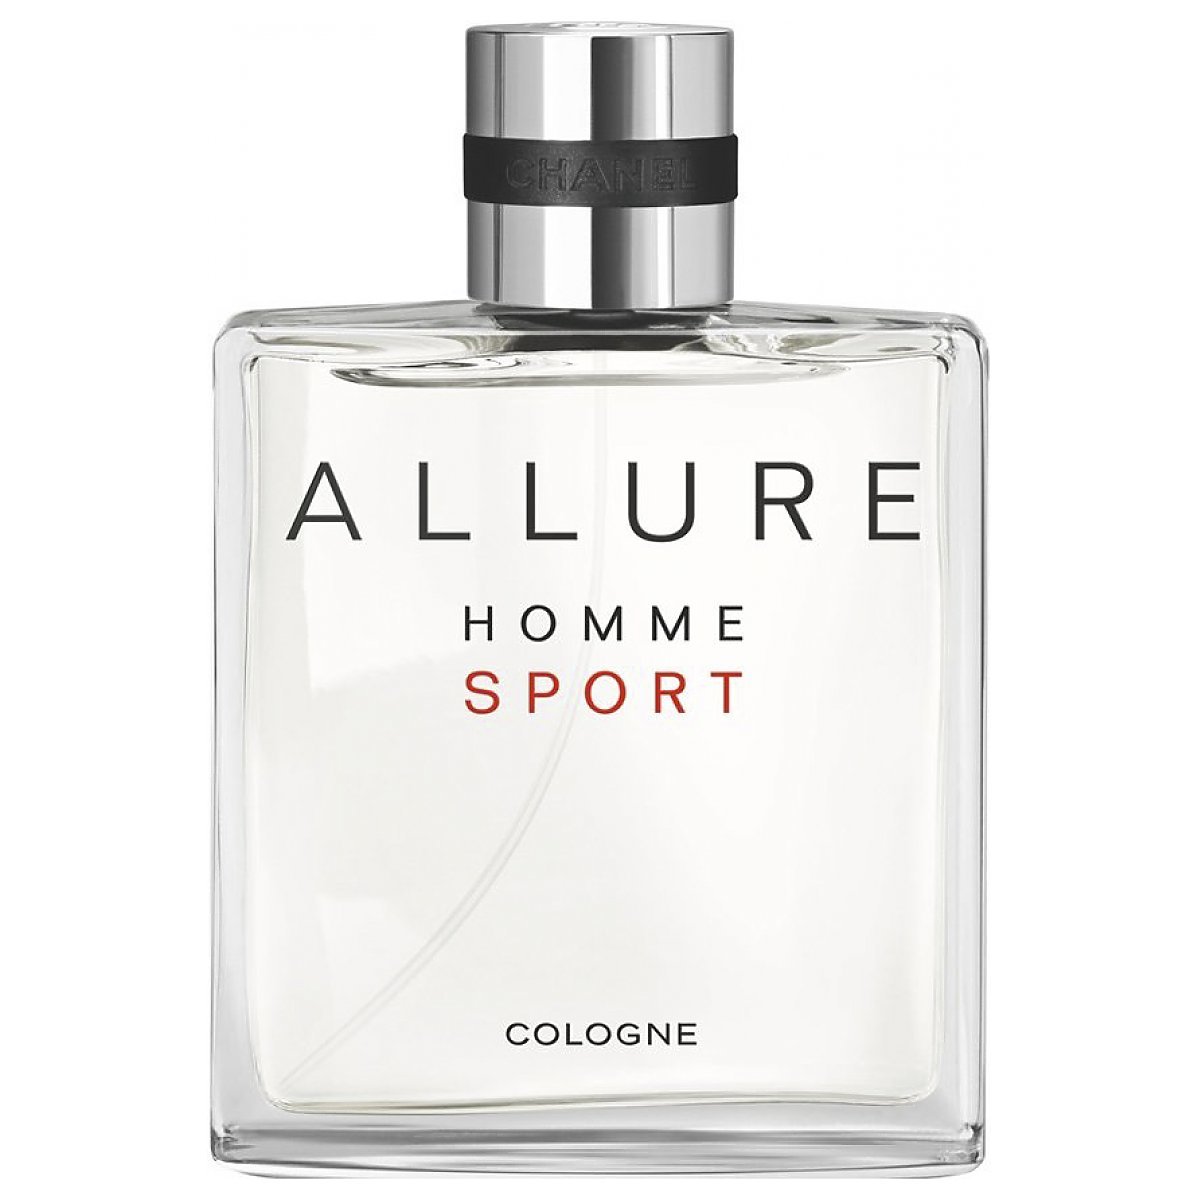 Allure Homme Edition Blanche Chanel zapach  to perfumy dla mężczyzn 2008